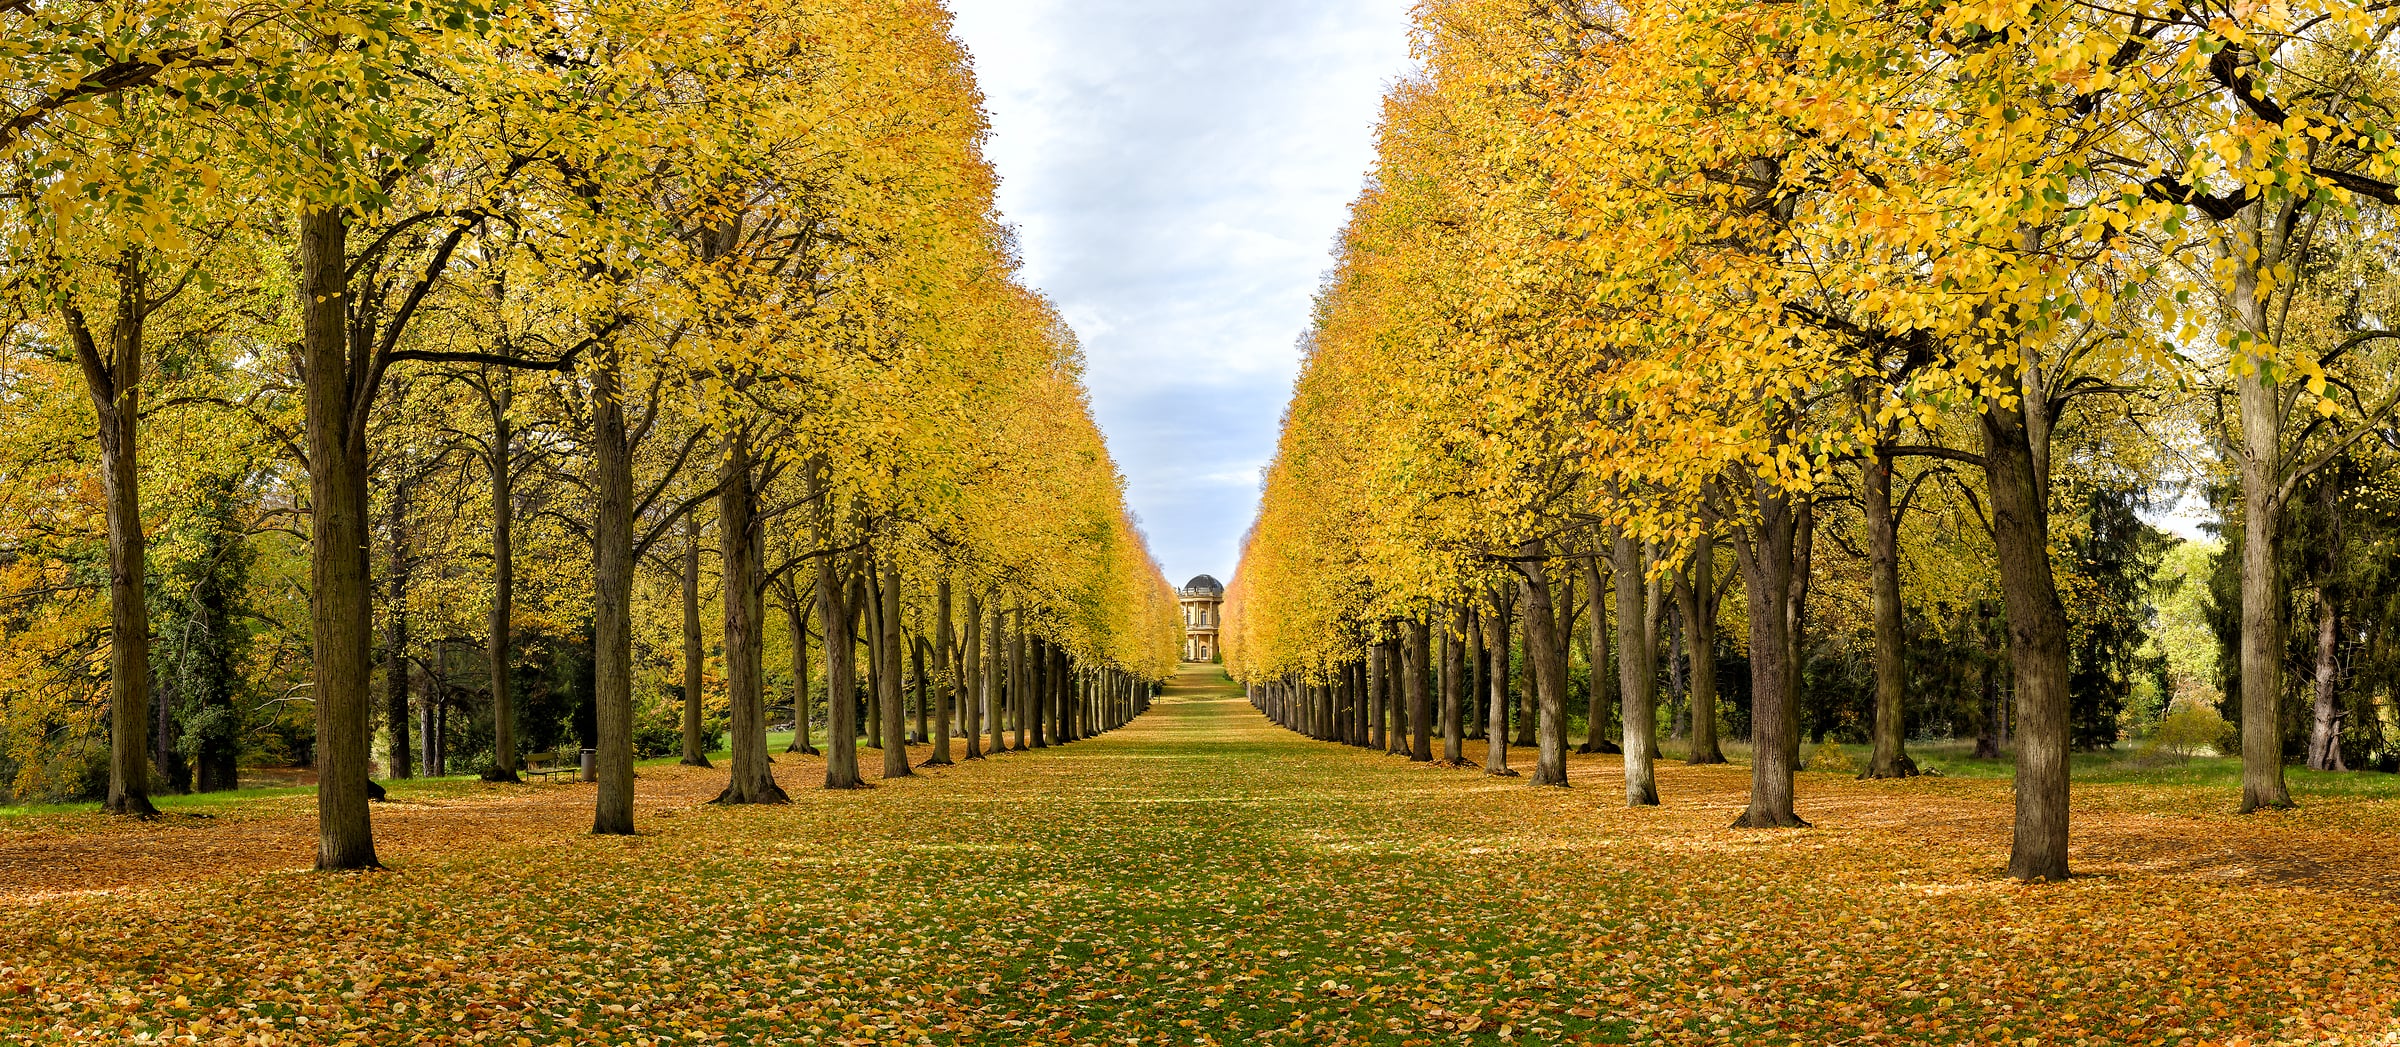 218 megapixels! A very high resolution, large-format VAST photo print of Sanssouci Park in autumn; photograph created by Scott Dimond in Schlosspark Sanssouci, Potsdam, Germany.